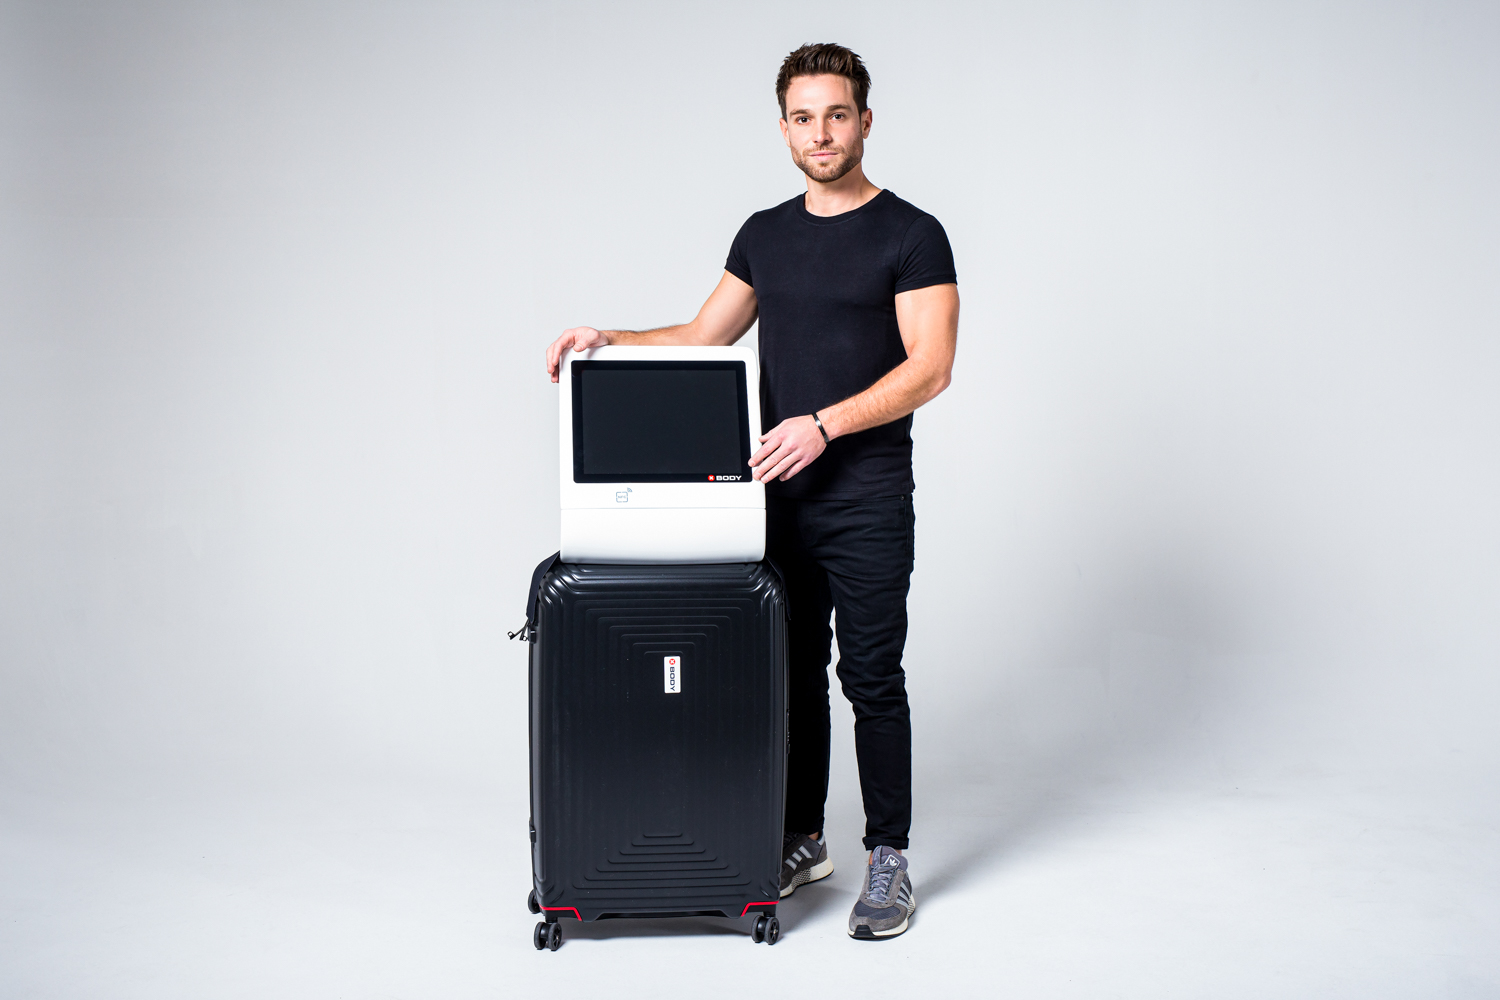 Xbody suitcase